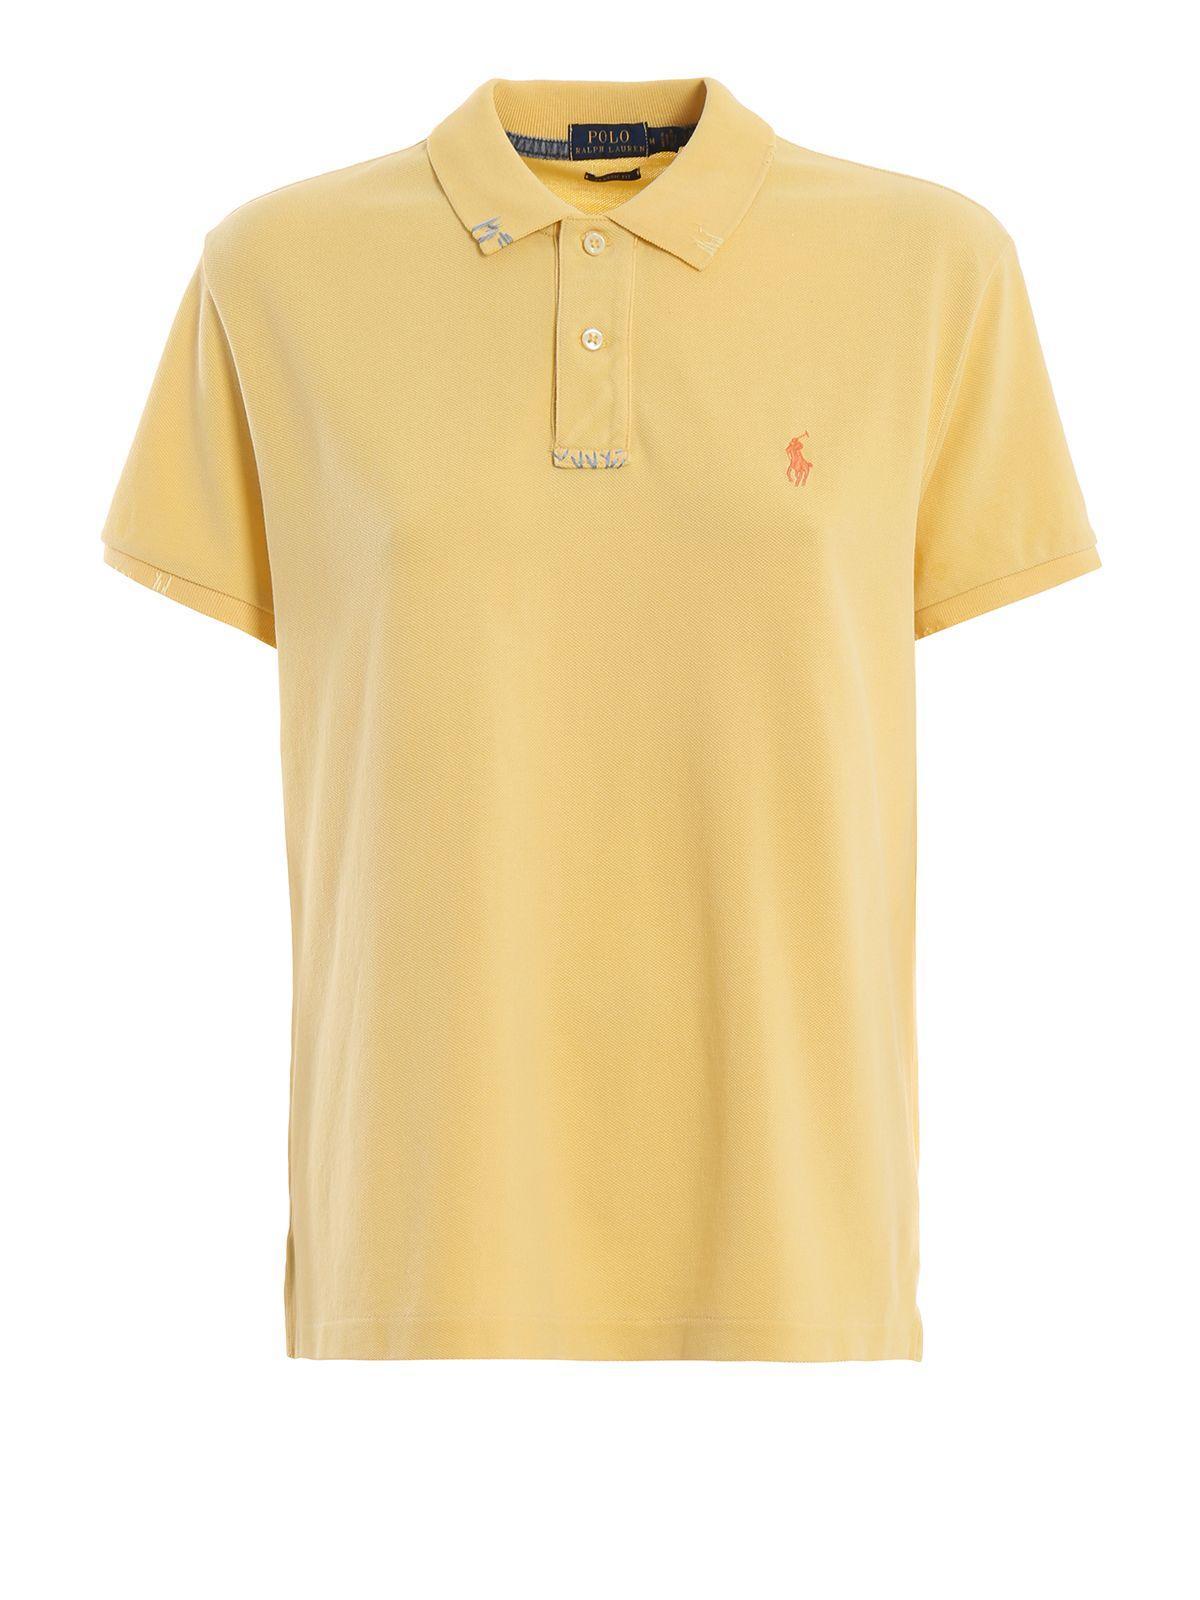 Ralph Lauren Yellow Cotton Polo Shirt in Yellow - Lyst